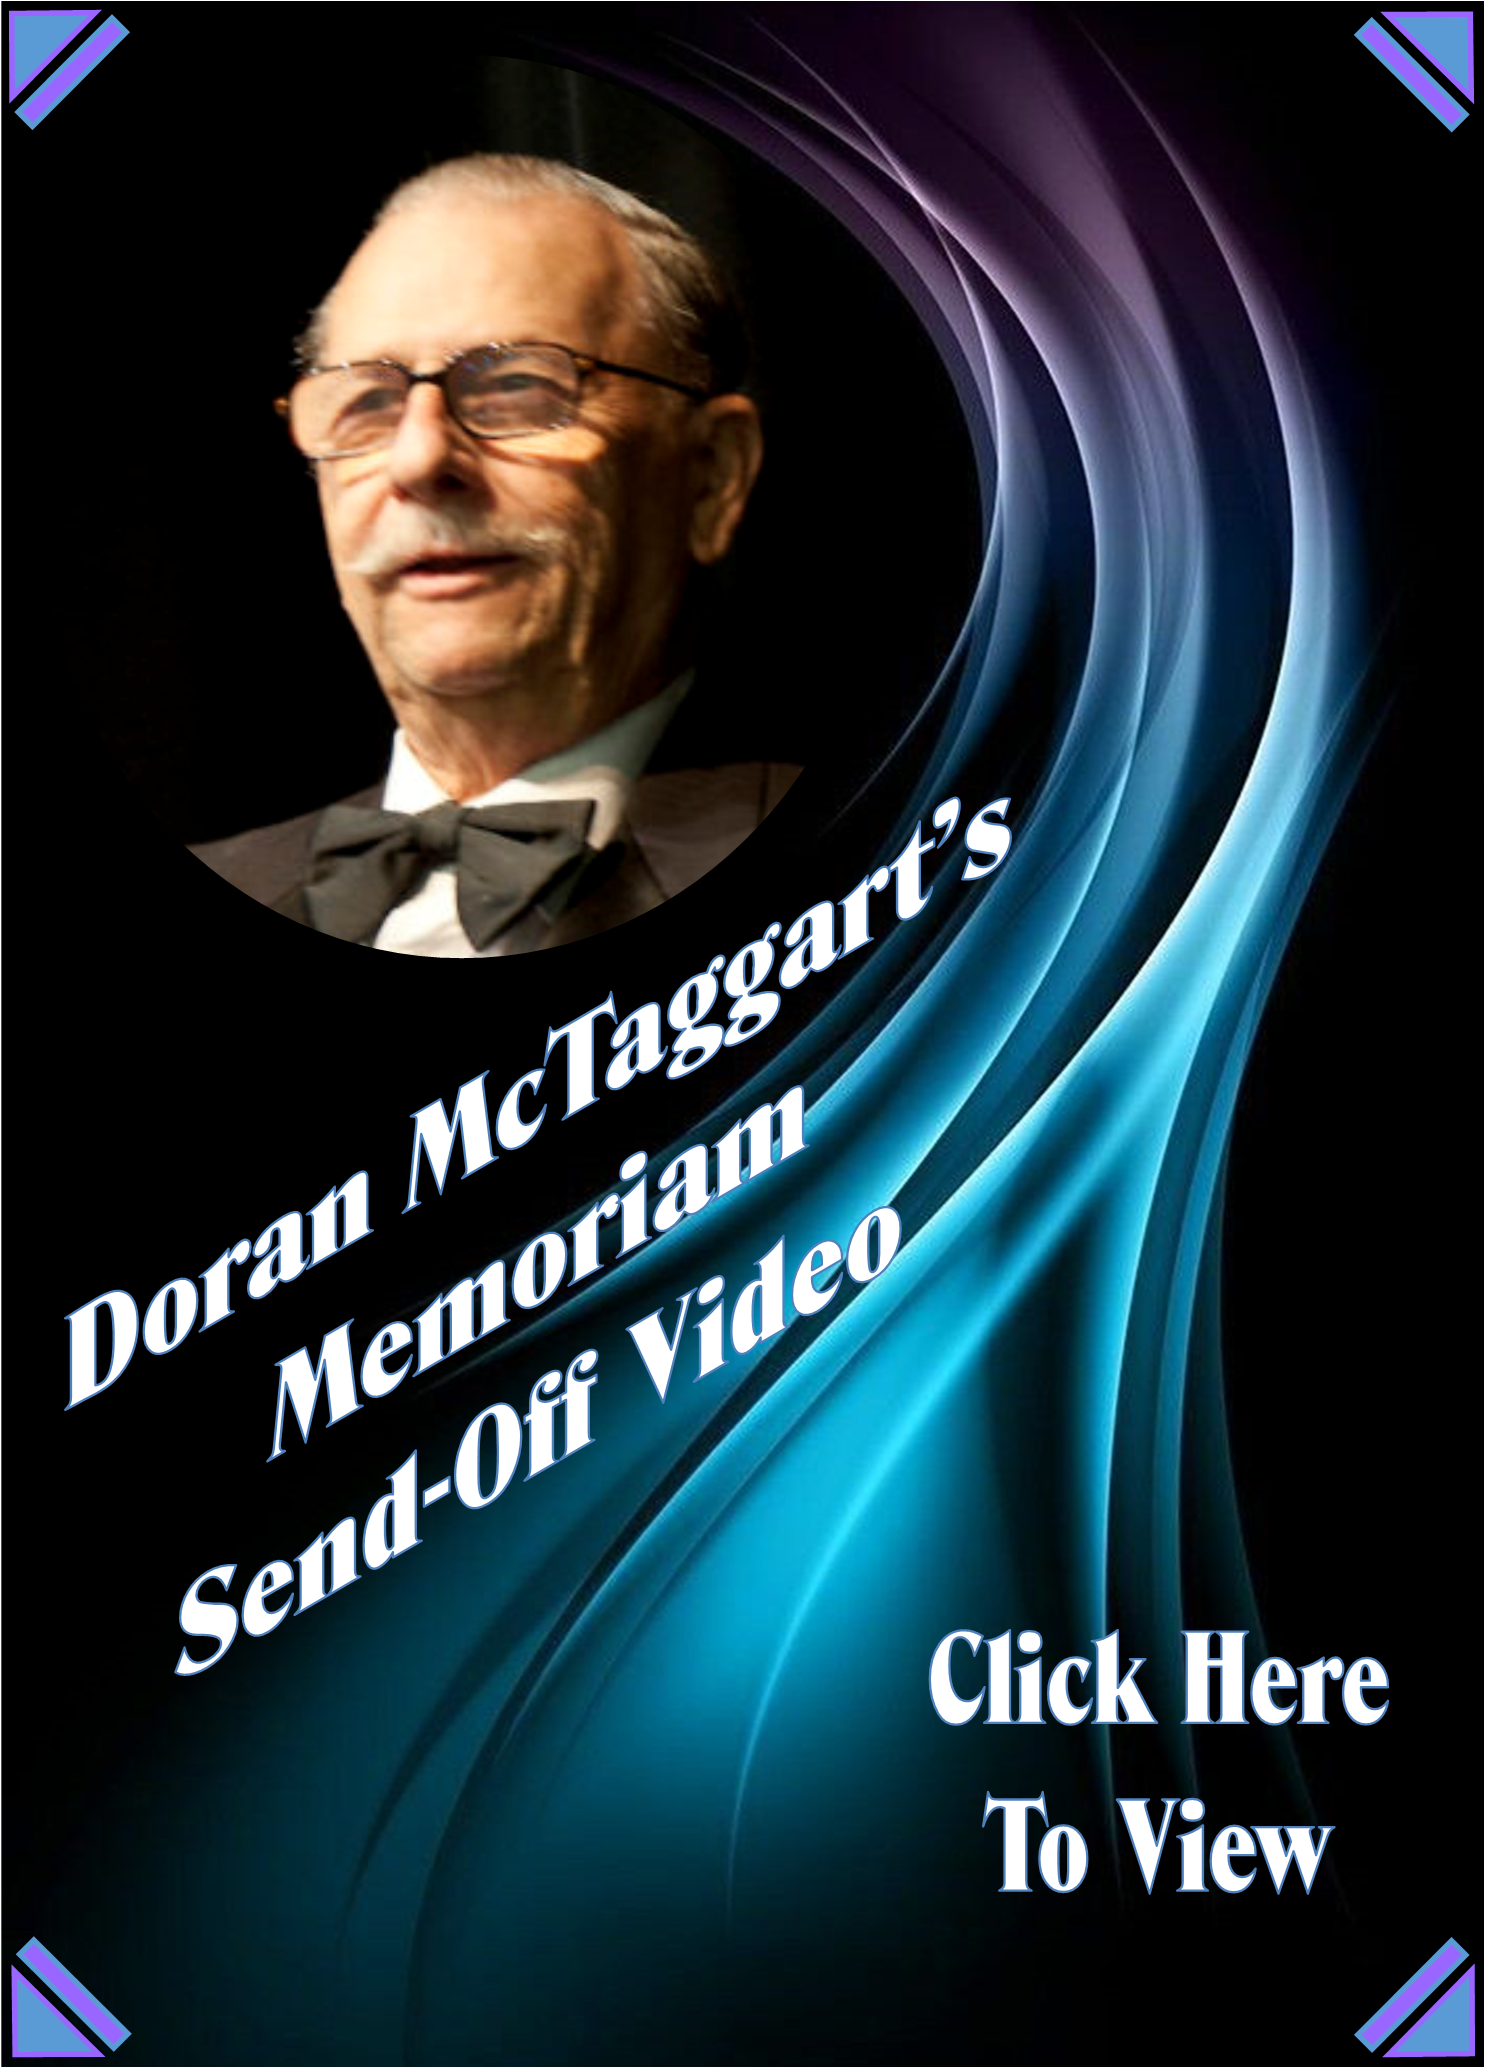 Doran McTaggart